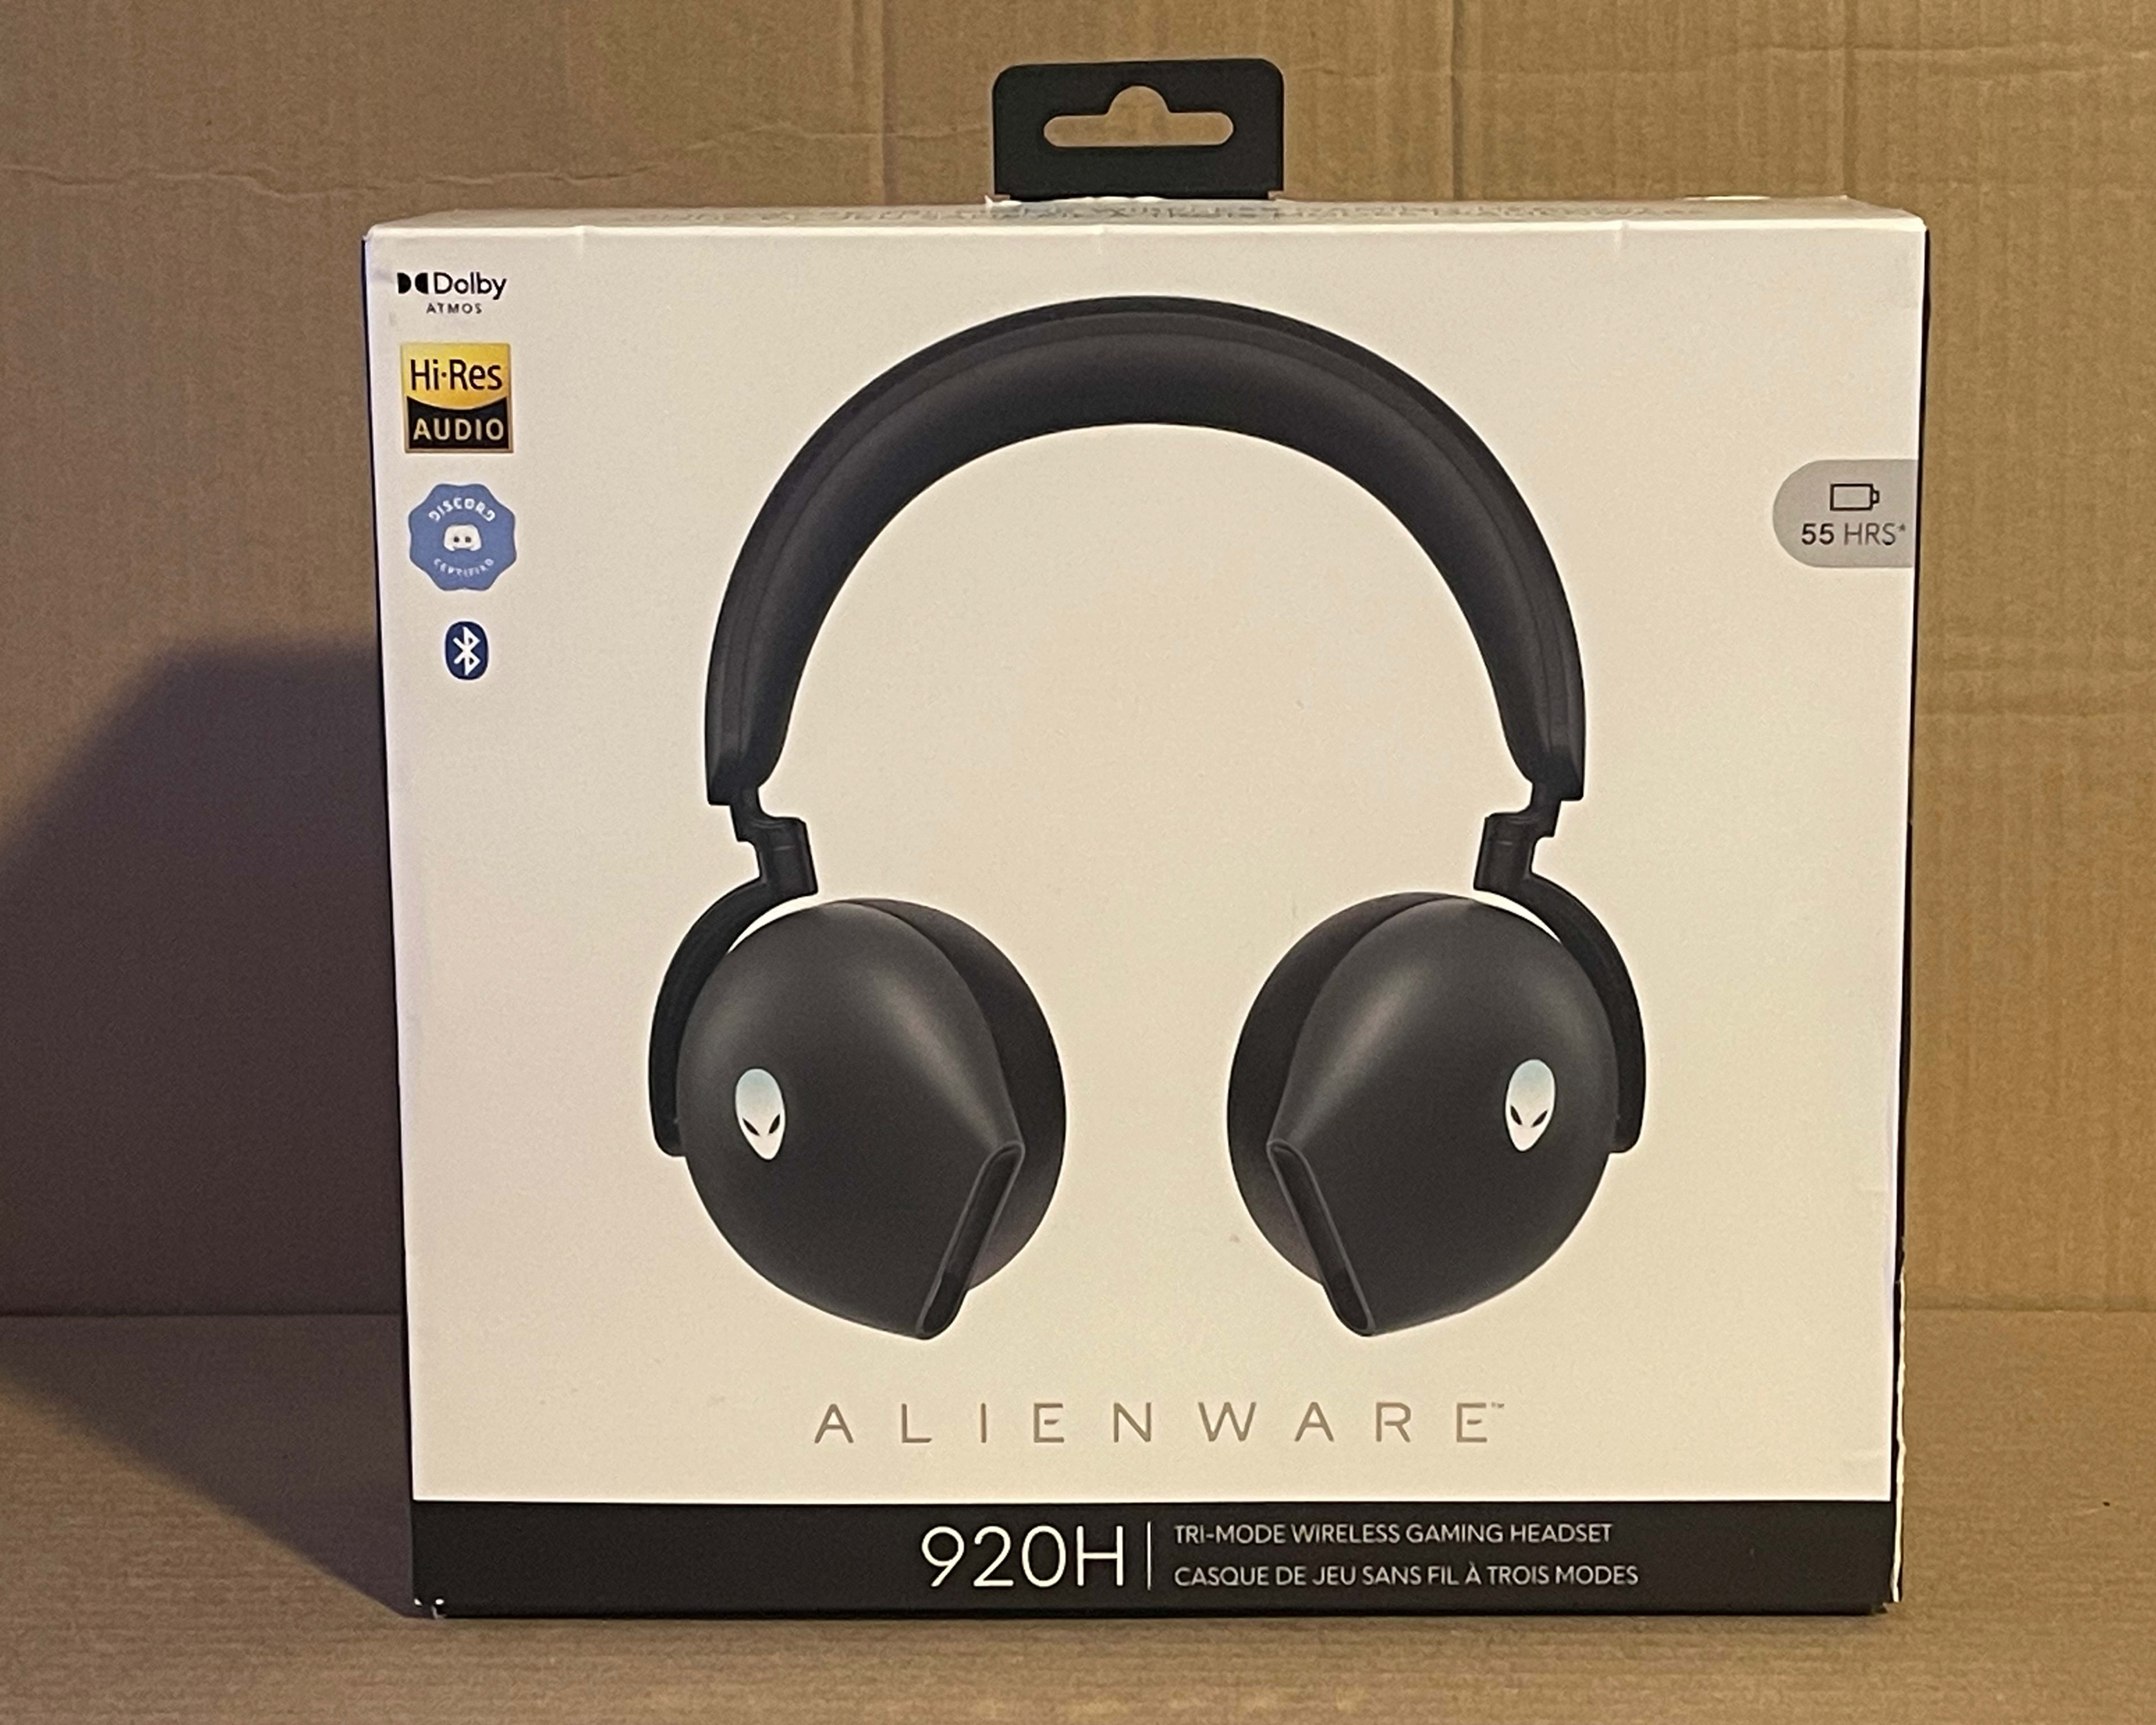 BNOB, Alienware 920H Wireless Gaming Headset